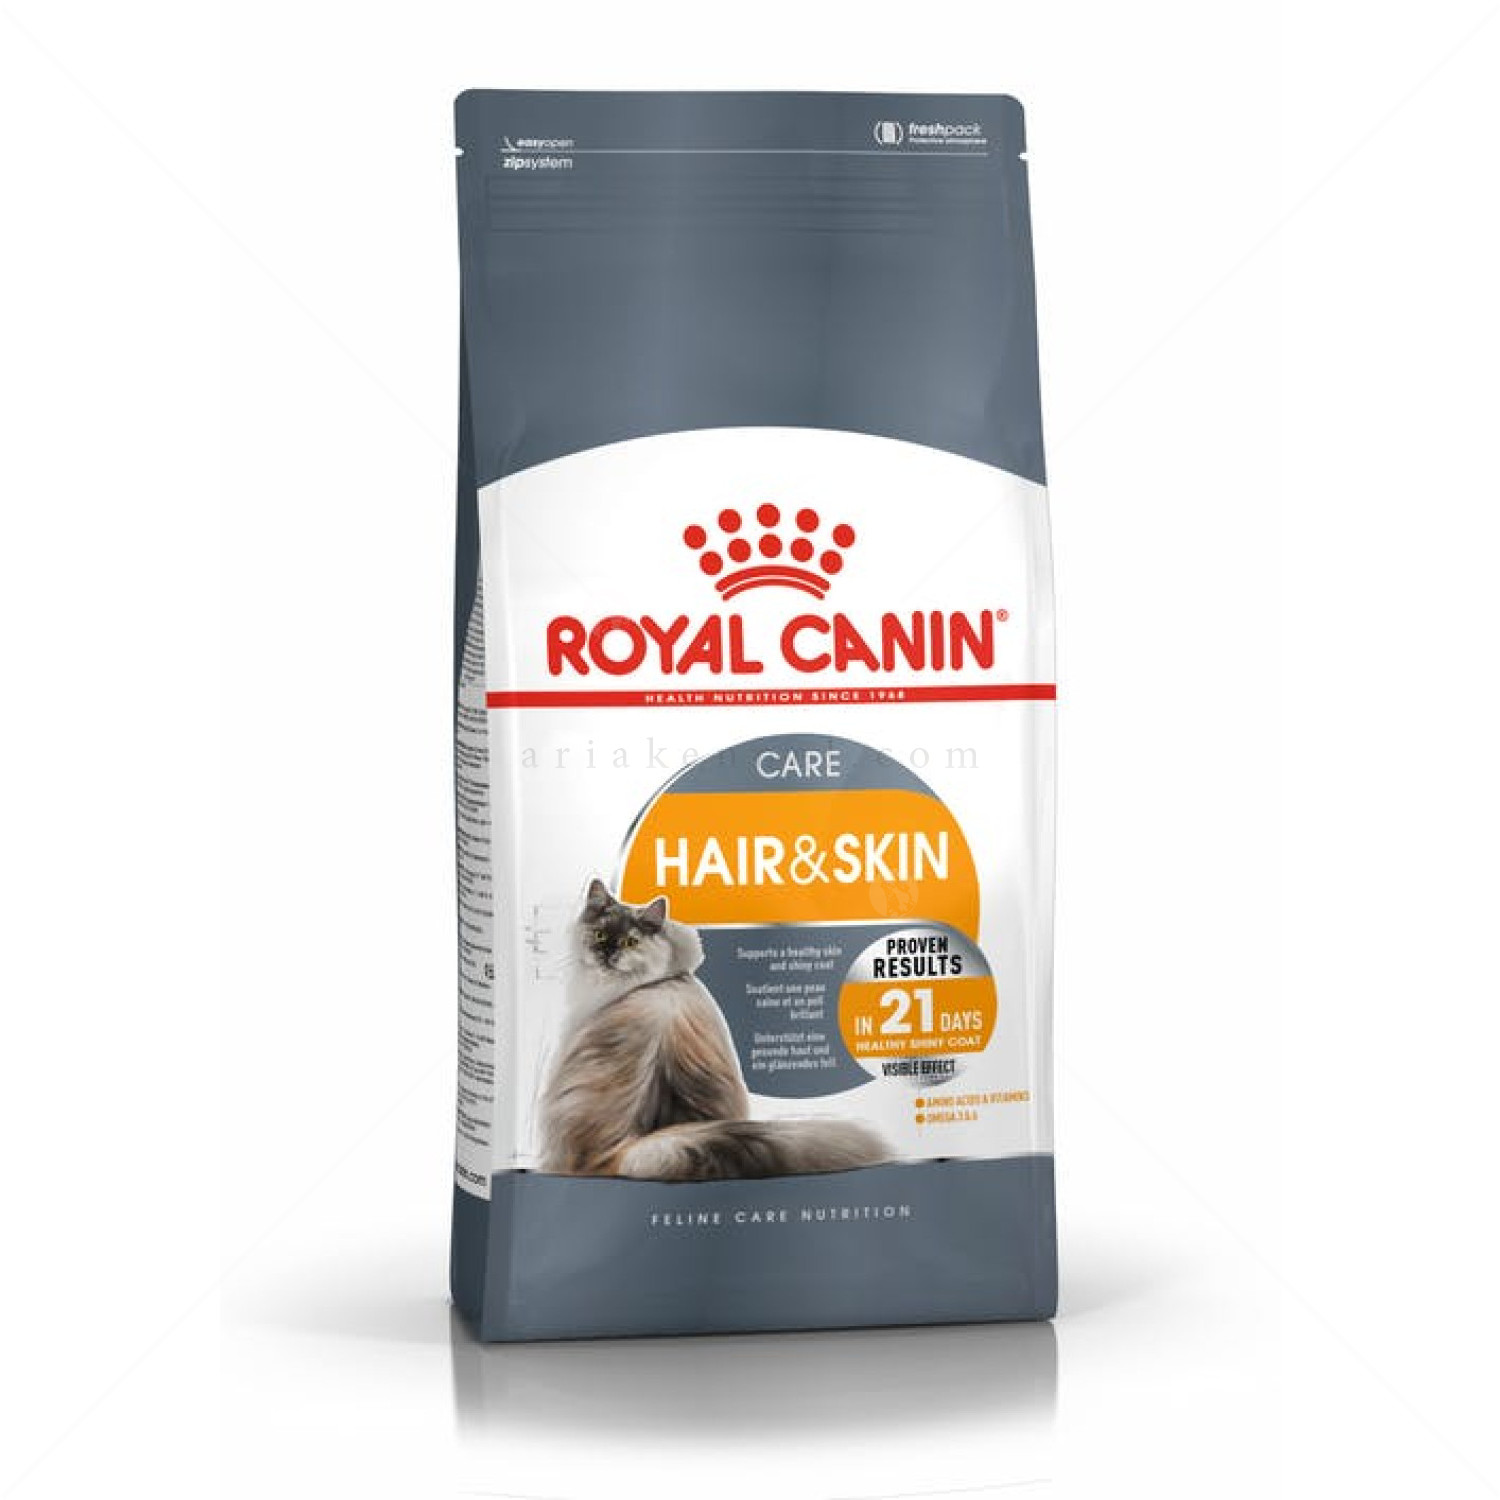 ROYAL CANIN 10 кг. Hair & Skin